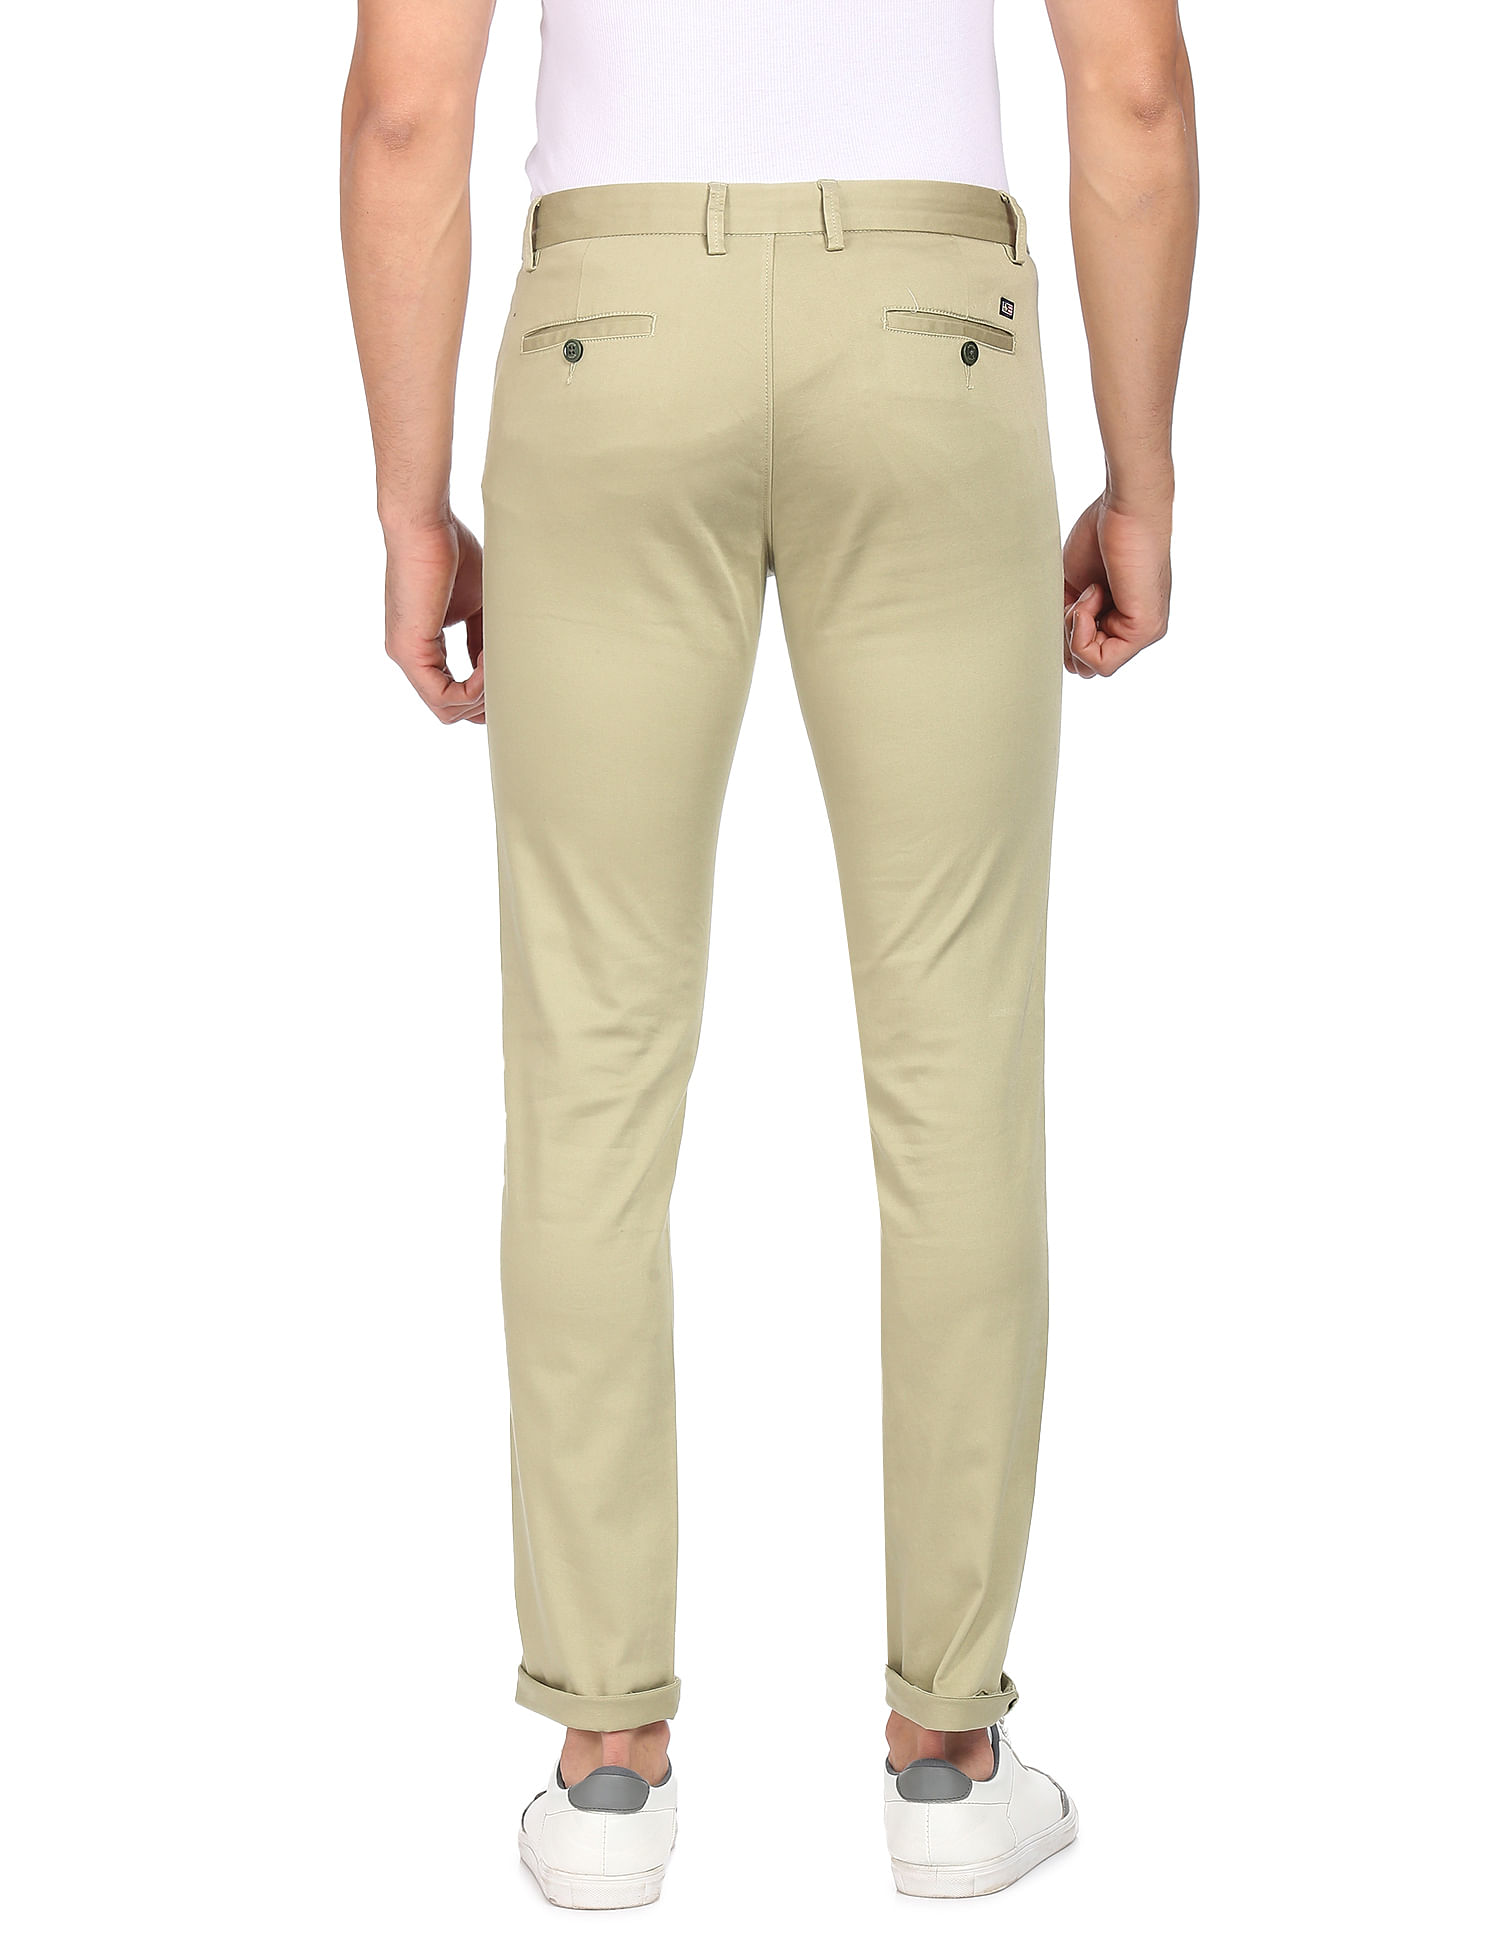 Buy Grey Trousers  Pants for Men by Killer Online  Ajiocom